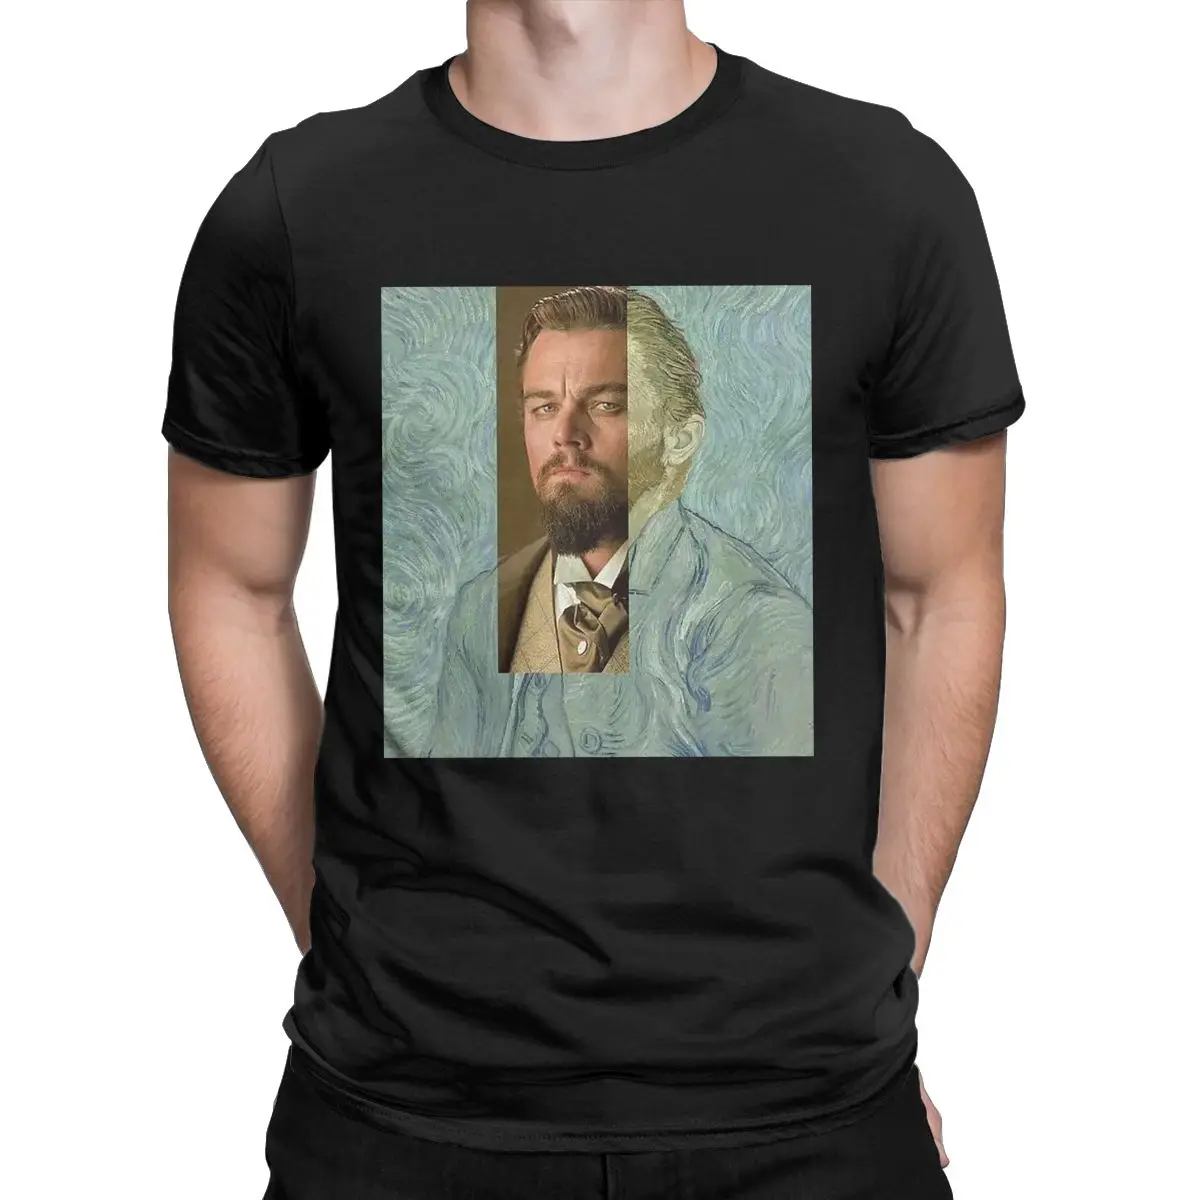 

Pop Culture Vincent Willem Van Gogh & Leonardo DiCaprio t shirt for men Hipsters Vintage Pure CottonFunny Gift Idea Clothing